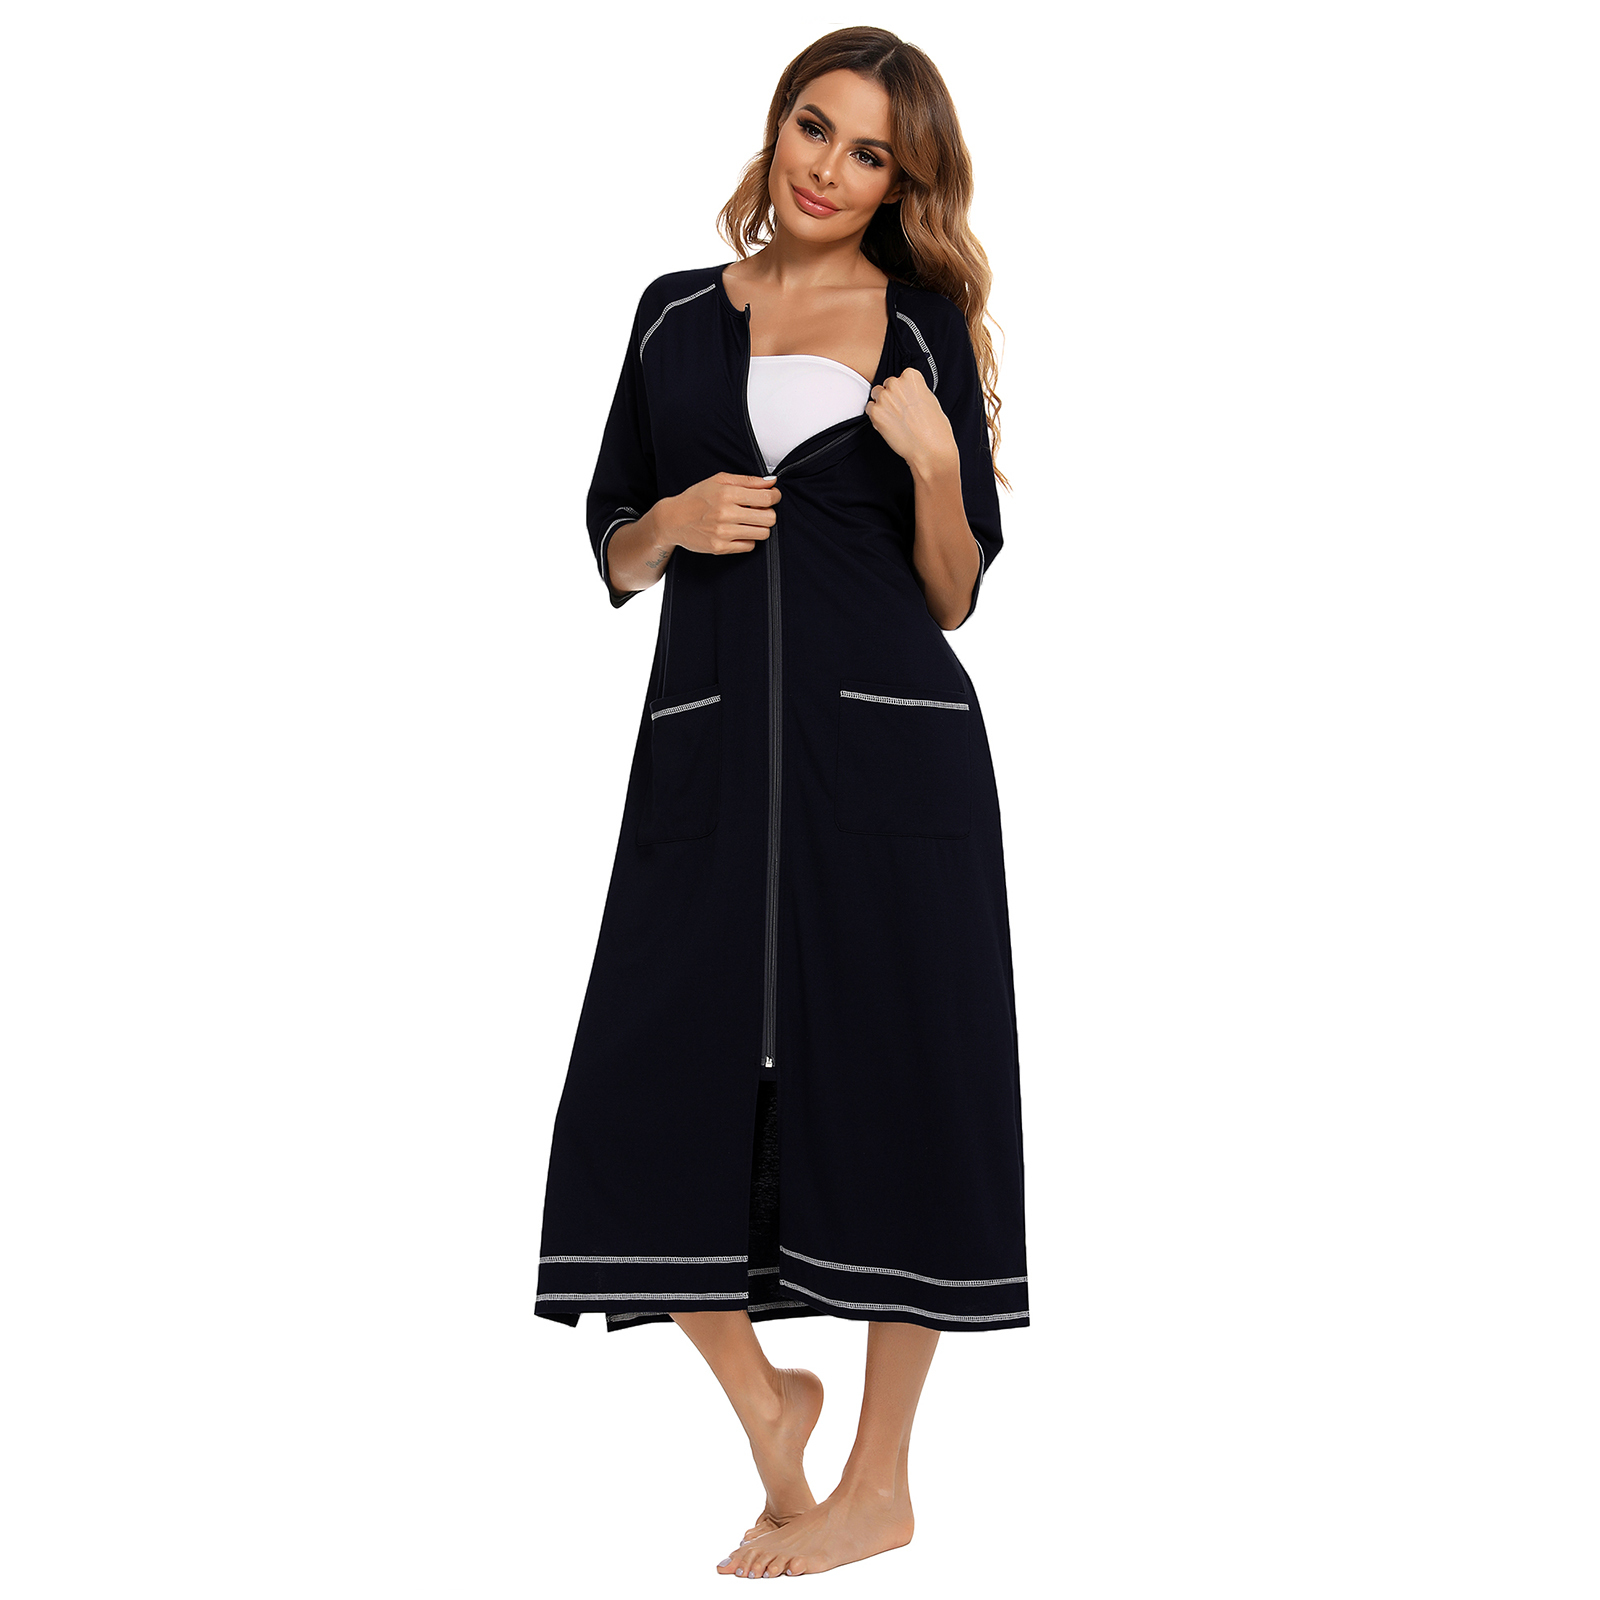 LOFIR Women Zipper Front Robes 3/4 Sleeve Loungewear Pockets Nightgown Loose-Fitting Ladies Long Sleepwear(Black,M) - image 2 of 5